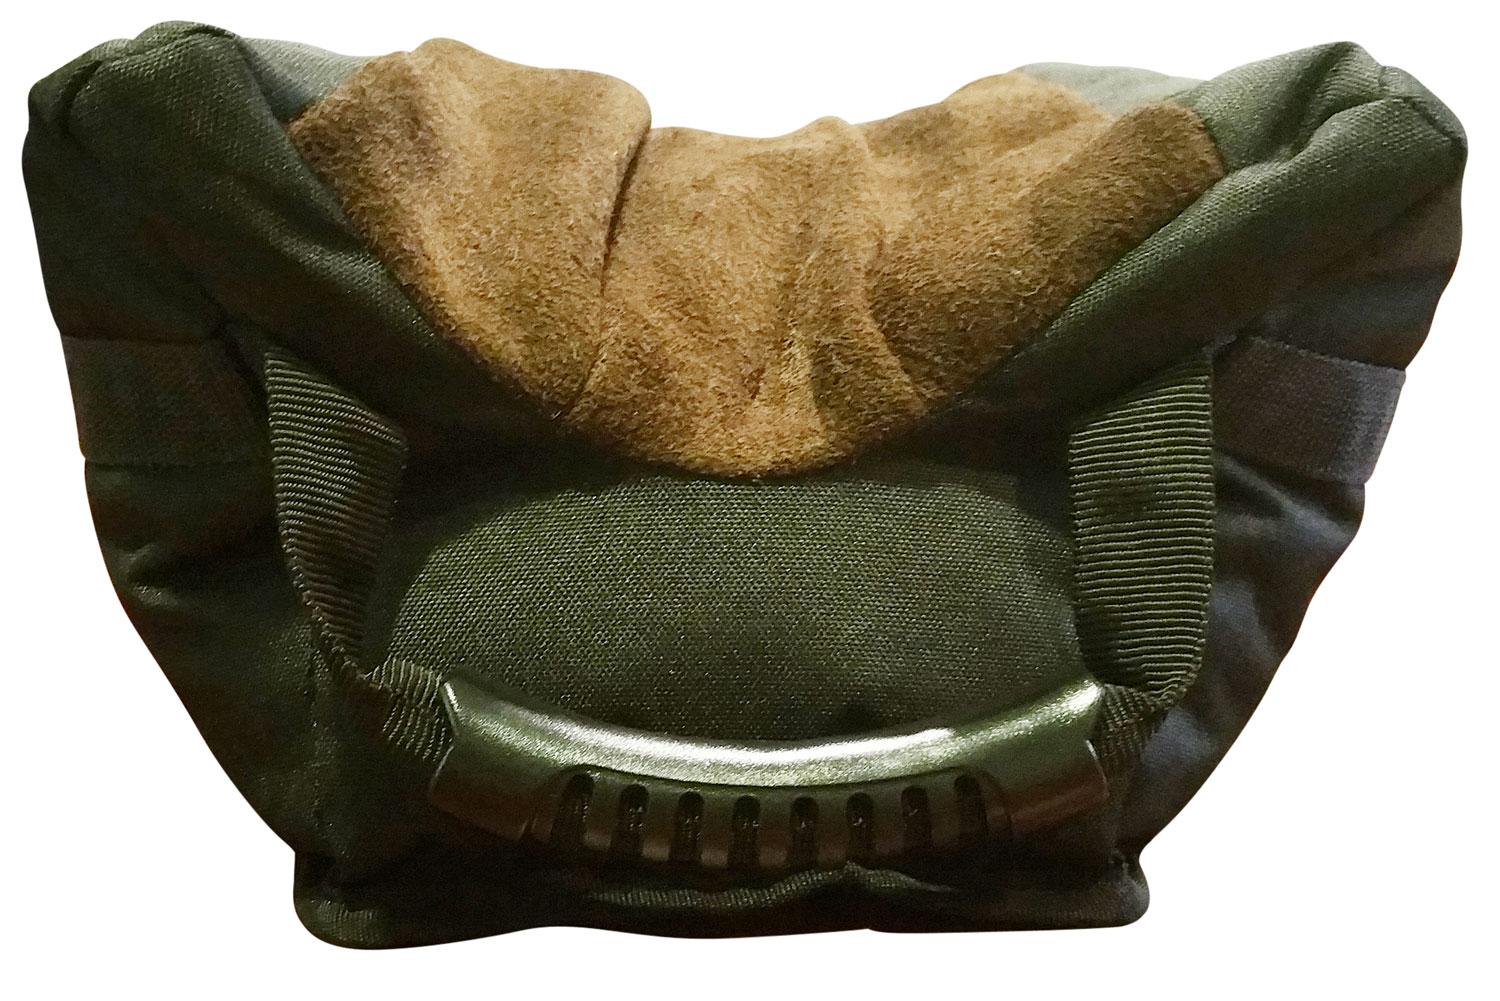  Bench Bmalbbxle Leather Bench Bag Xl